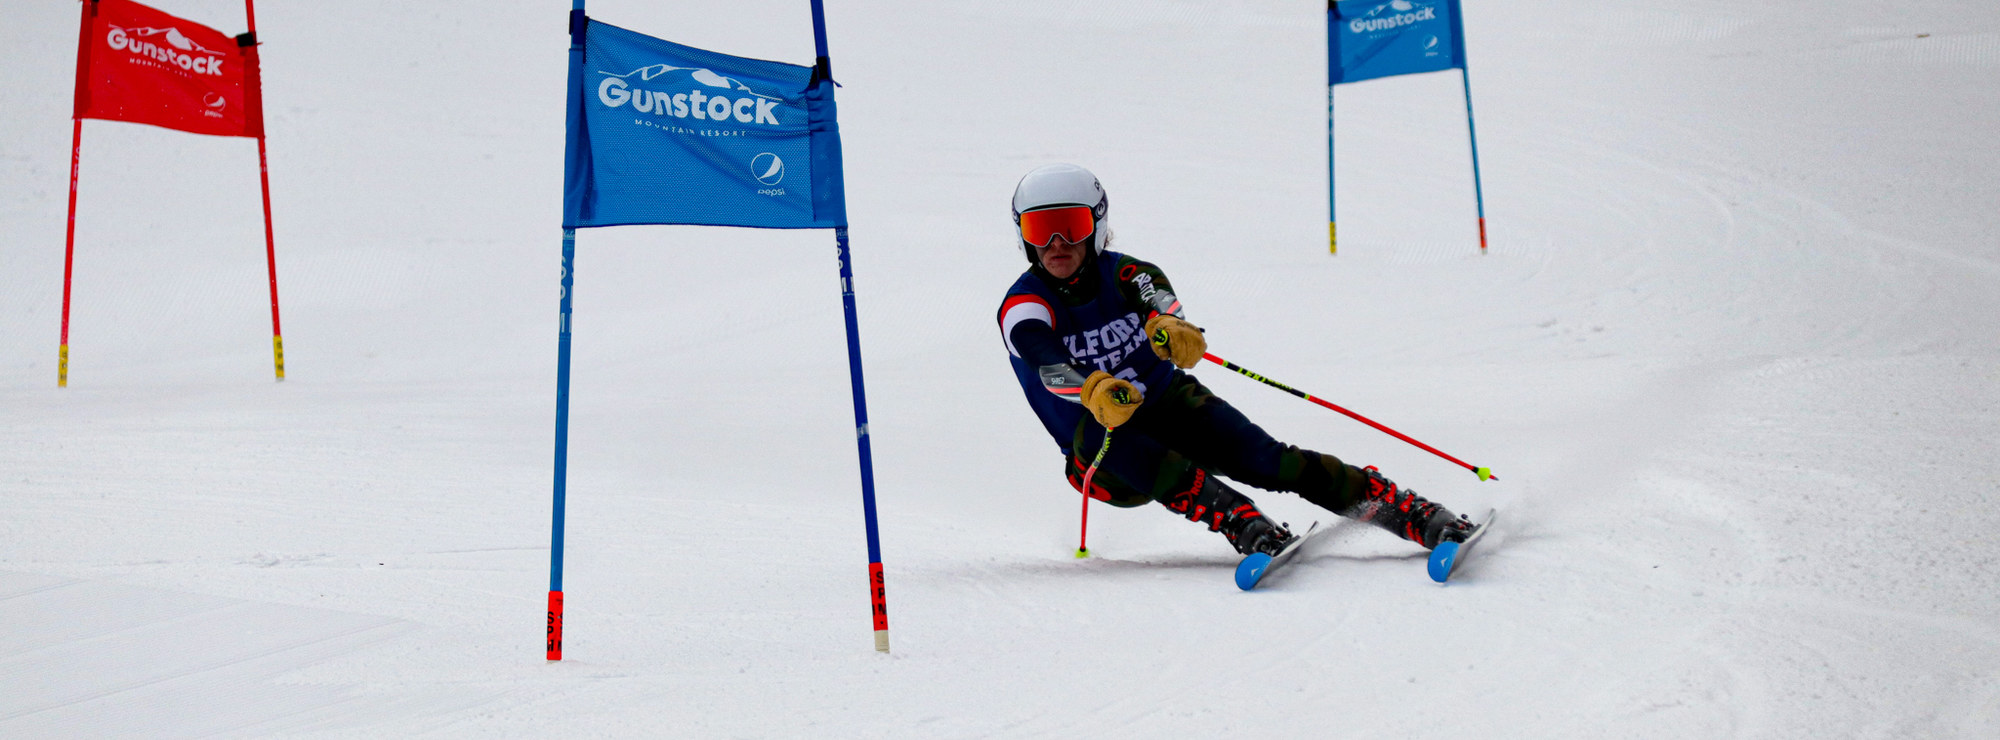 Skier races through a slalom course